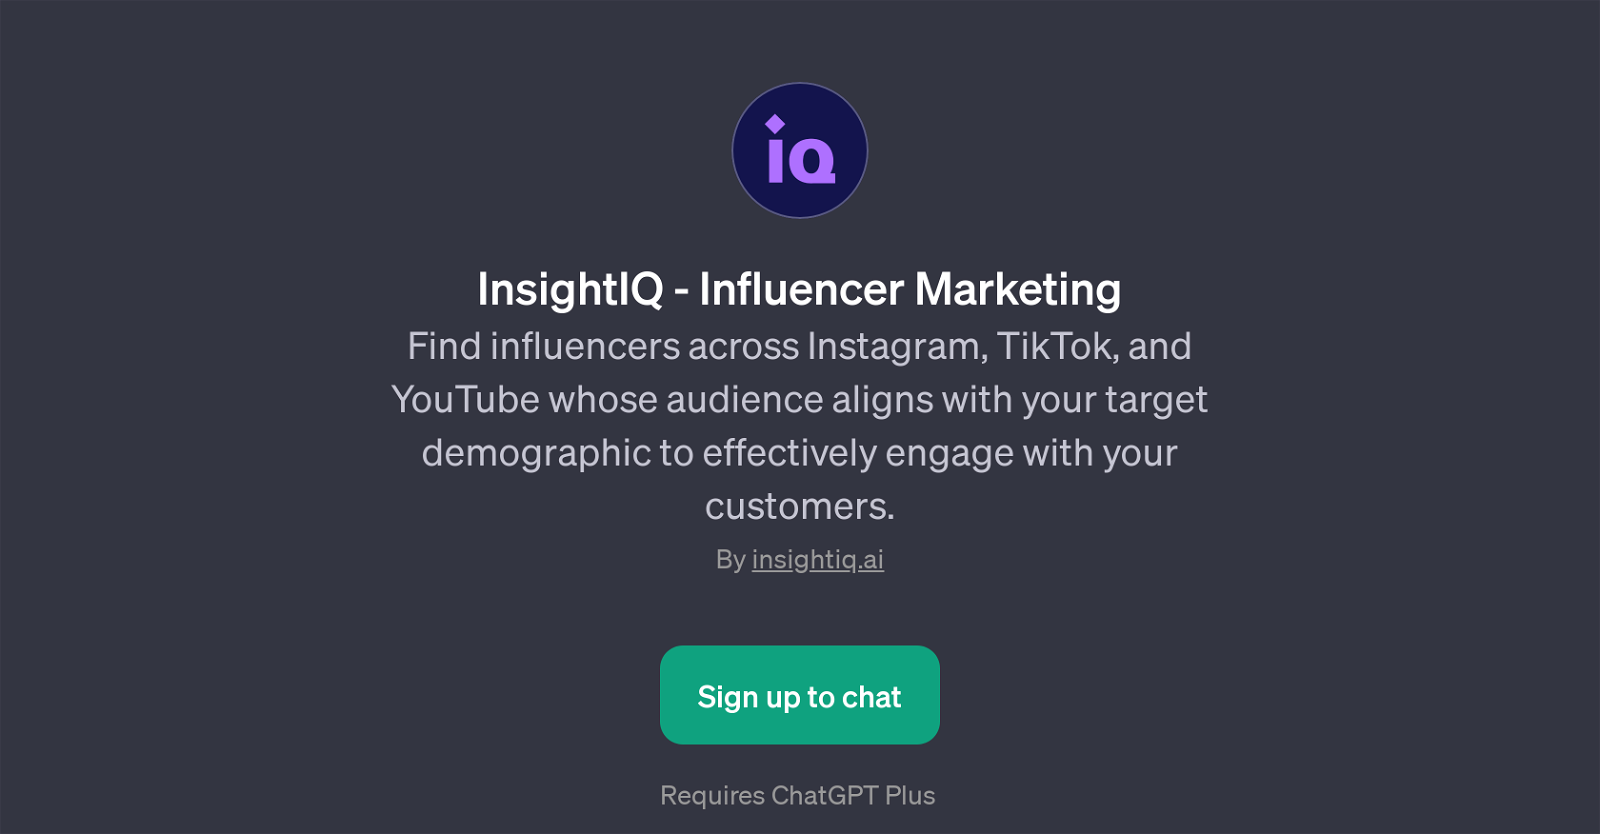 InsightIQ - Influencer Marketing website